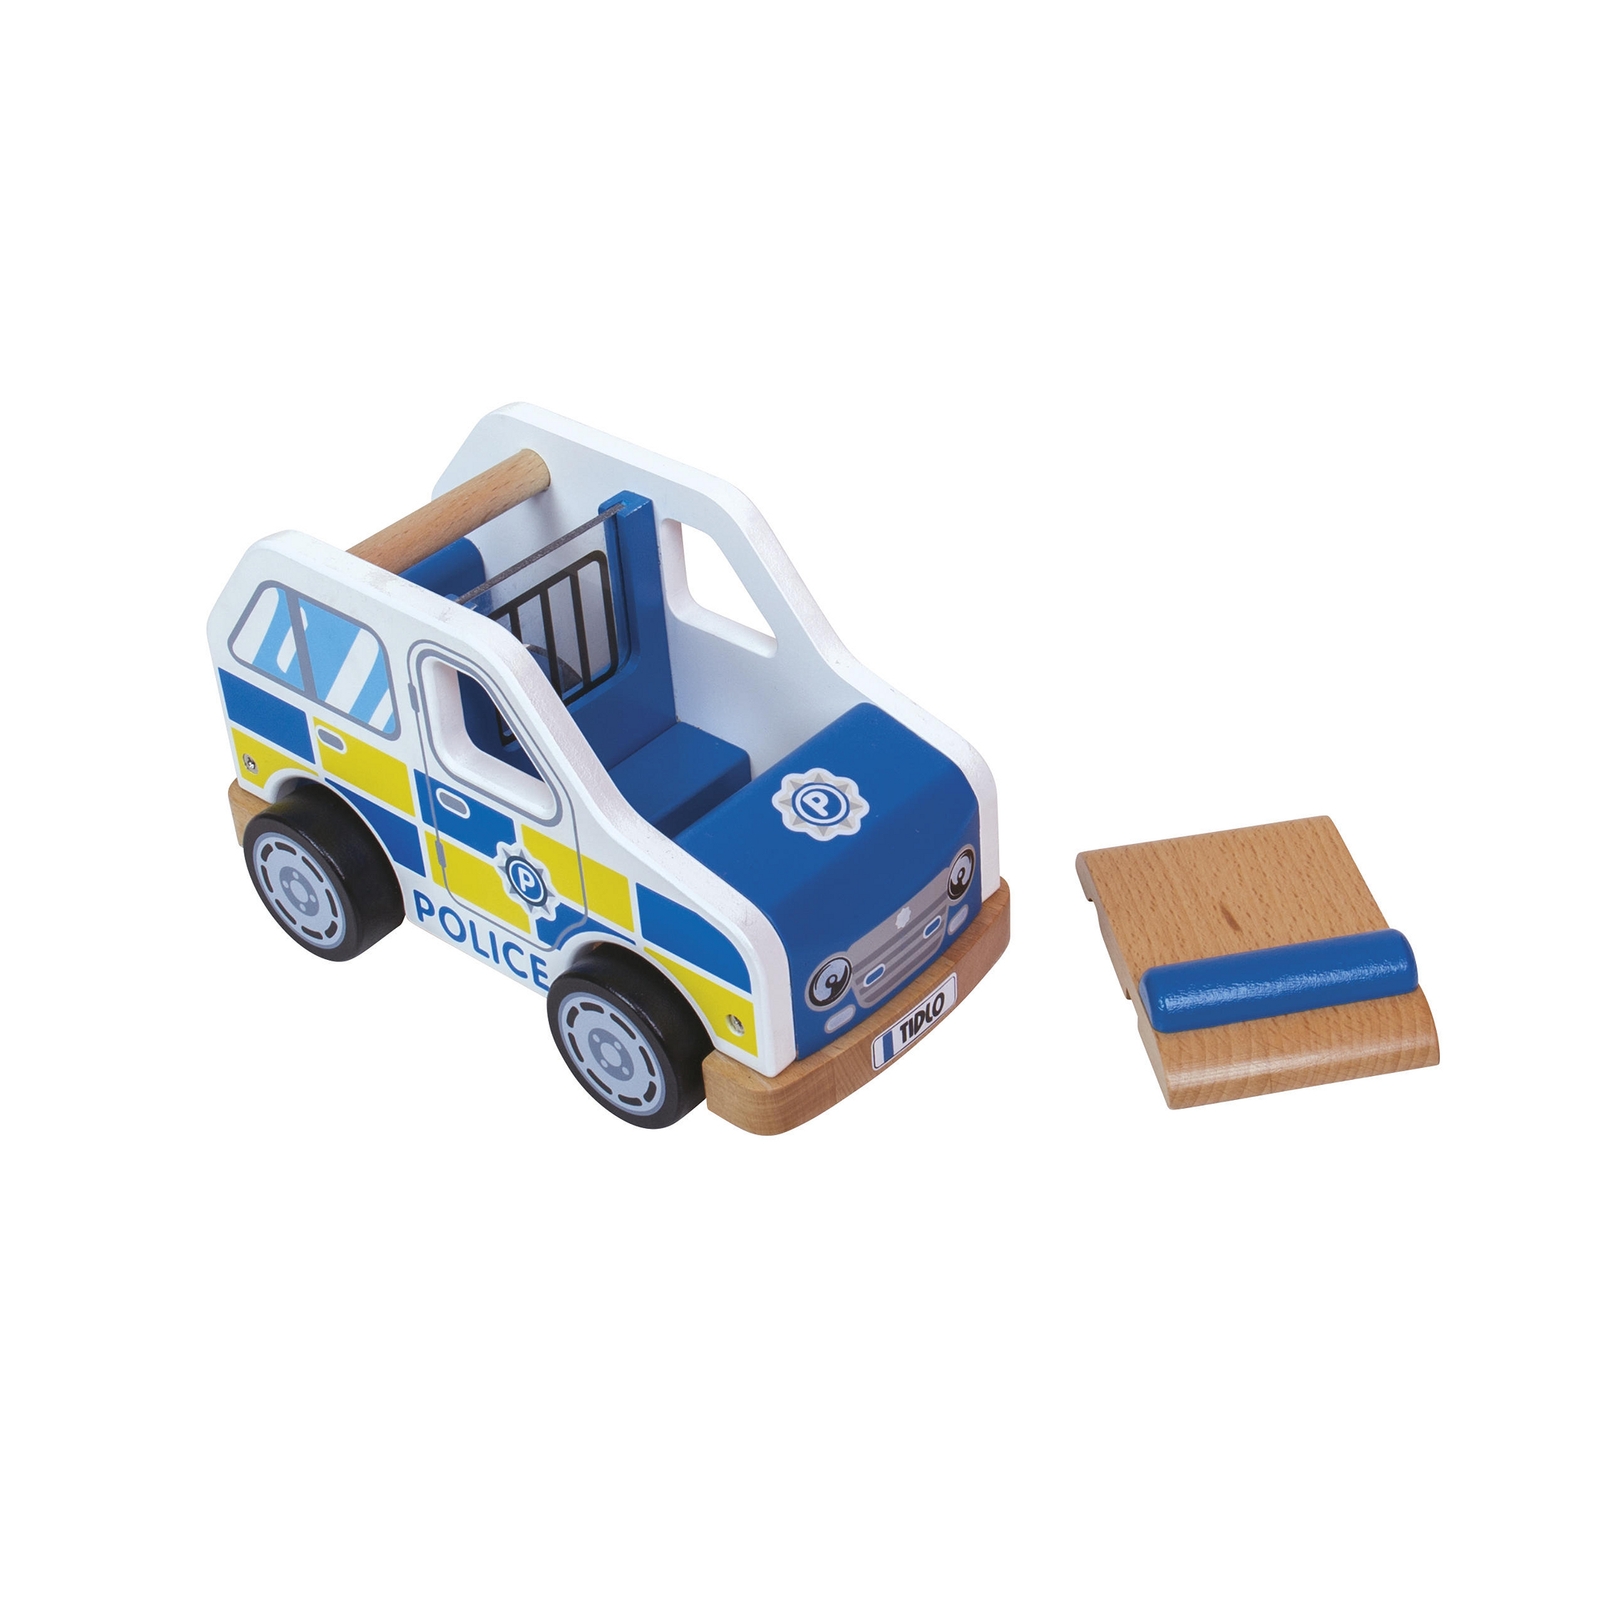 Tidlo Wooden Police Car - 21 x 11 x 13cm - Each